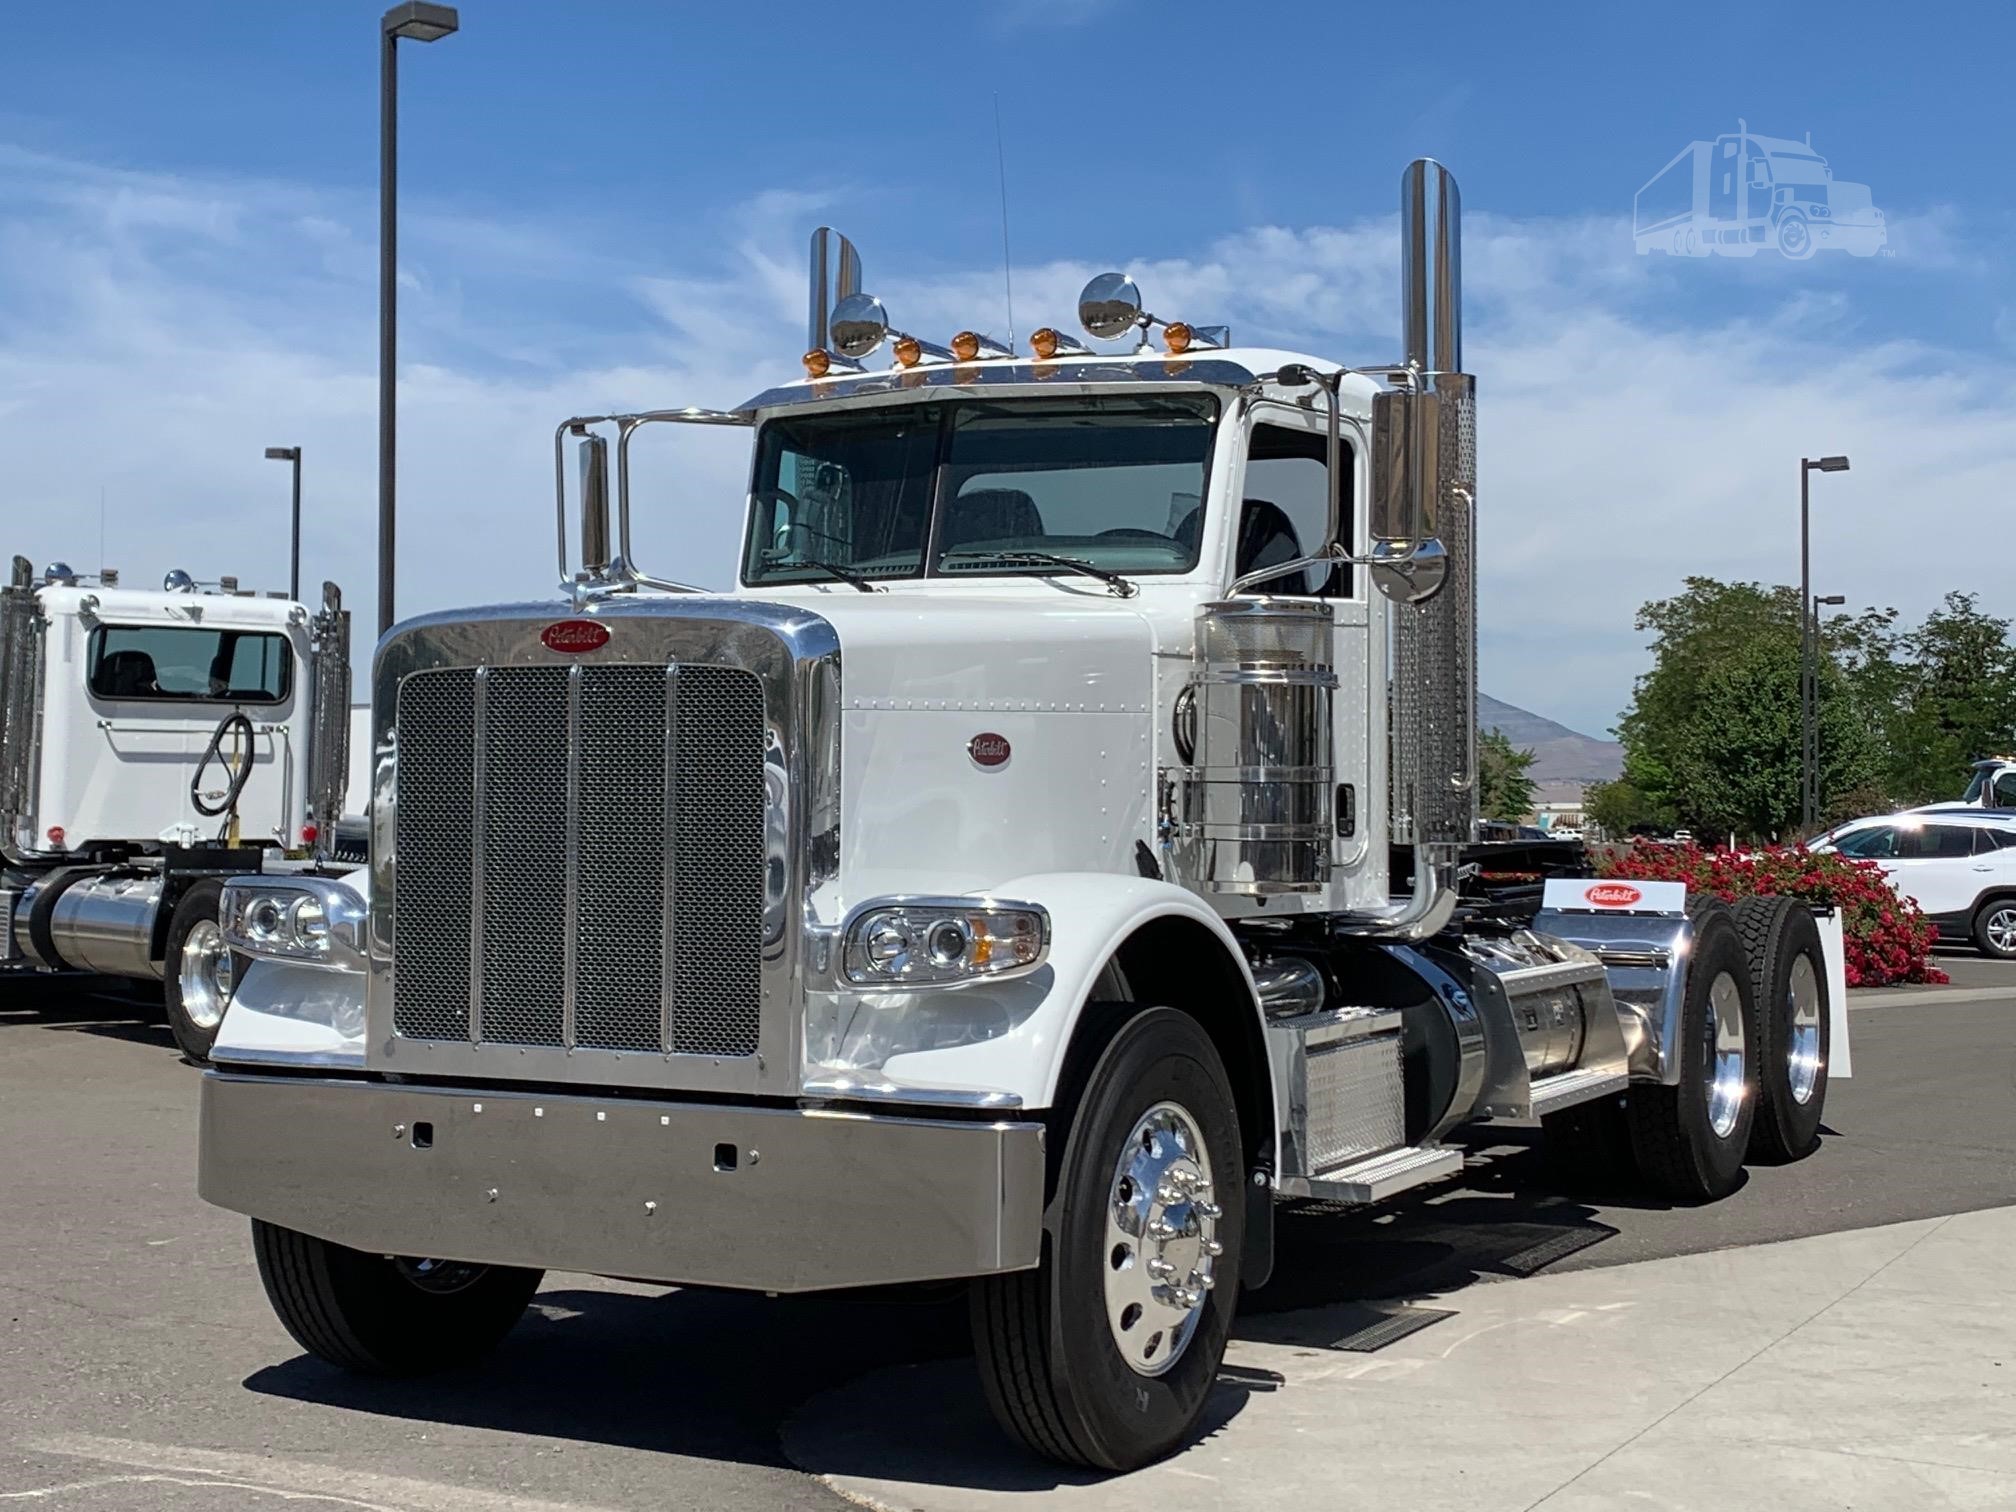 2022 PETERBILT 389 For Sale In Sparks, Nevada | TruckPaper.com